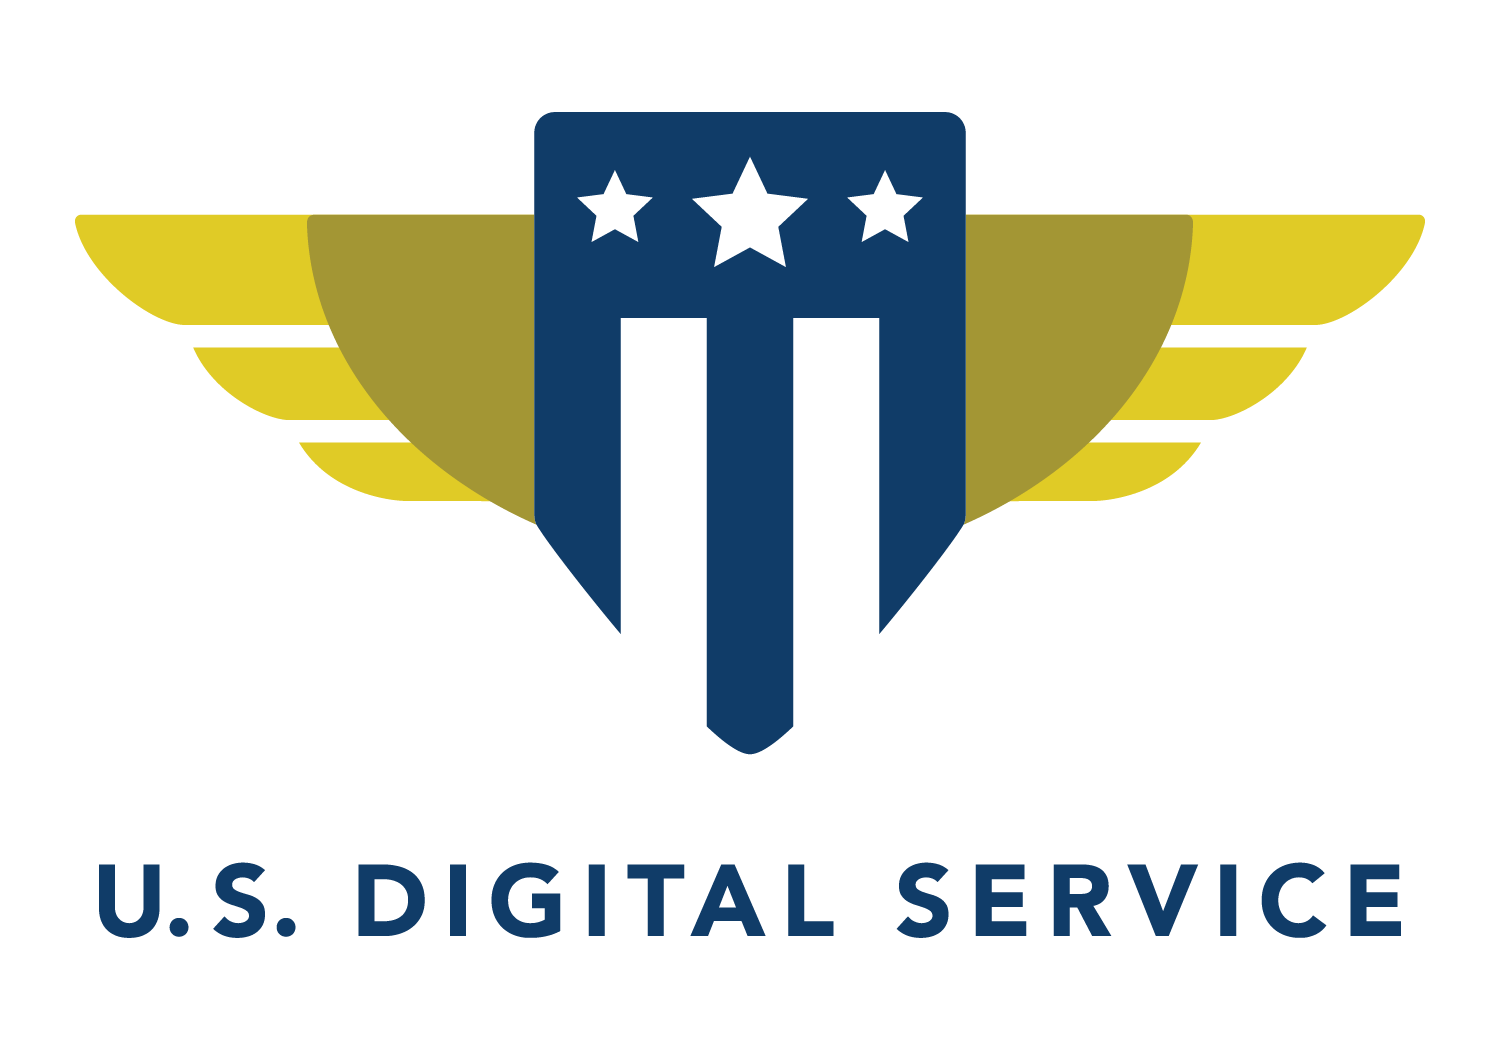 U.S. Digital Service